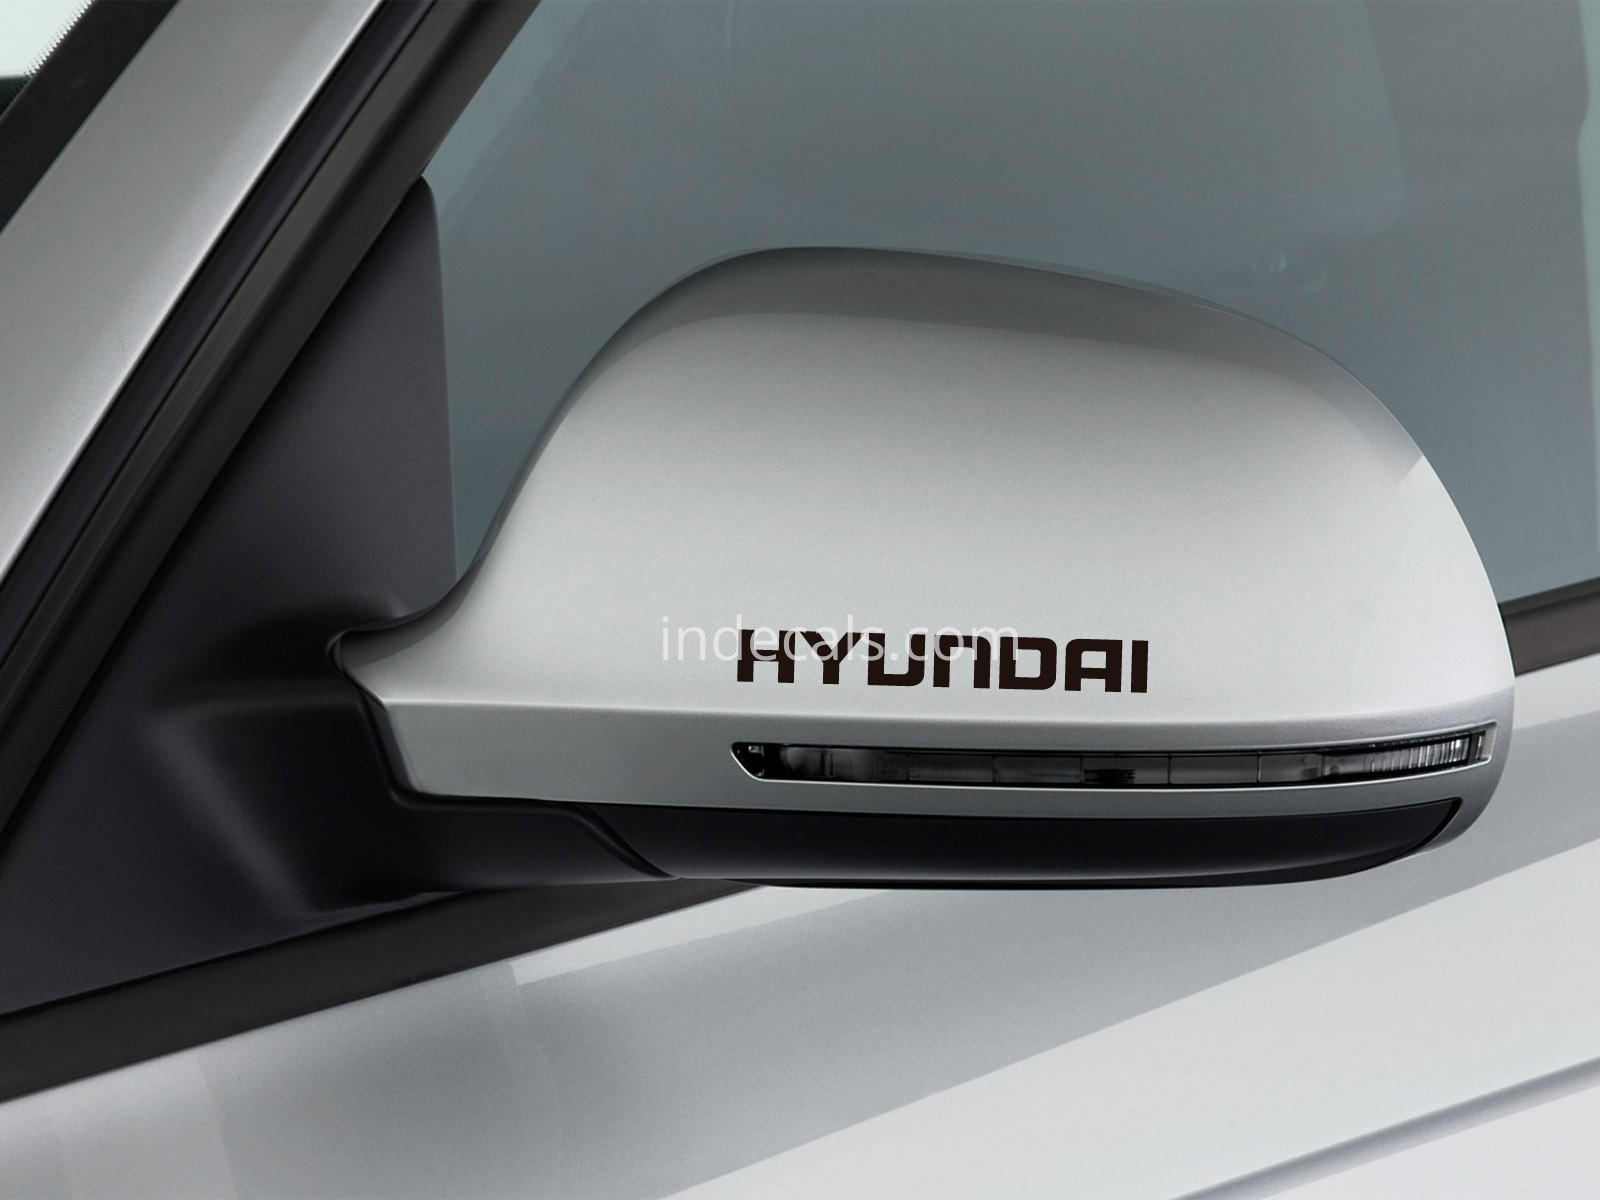 3 x Hyundai Stickers for Mirrors - Black